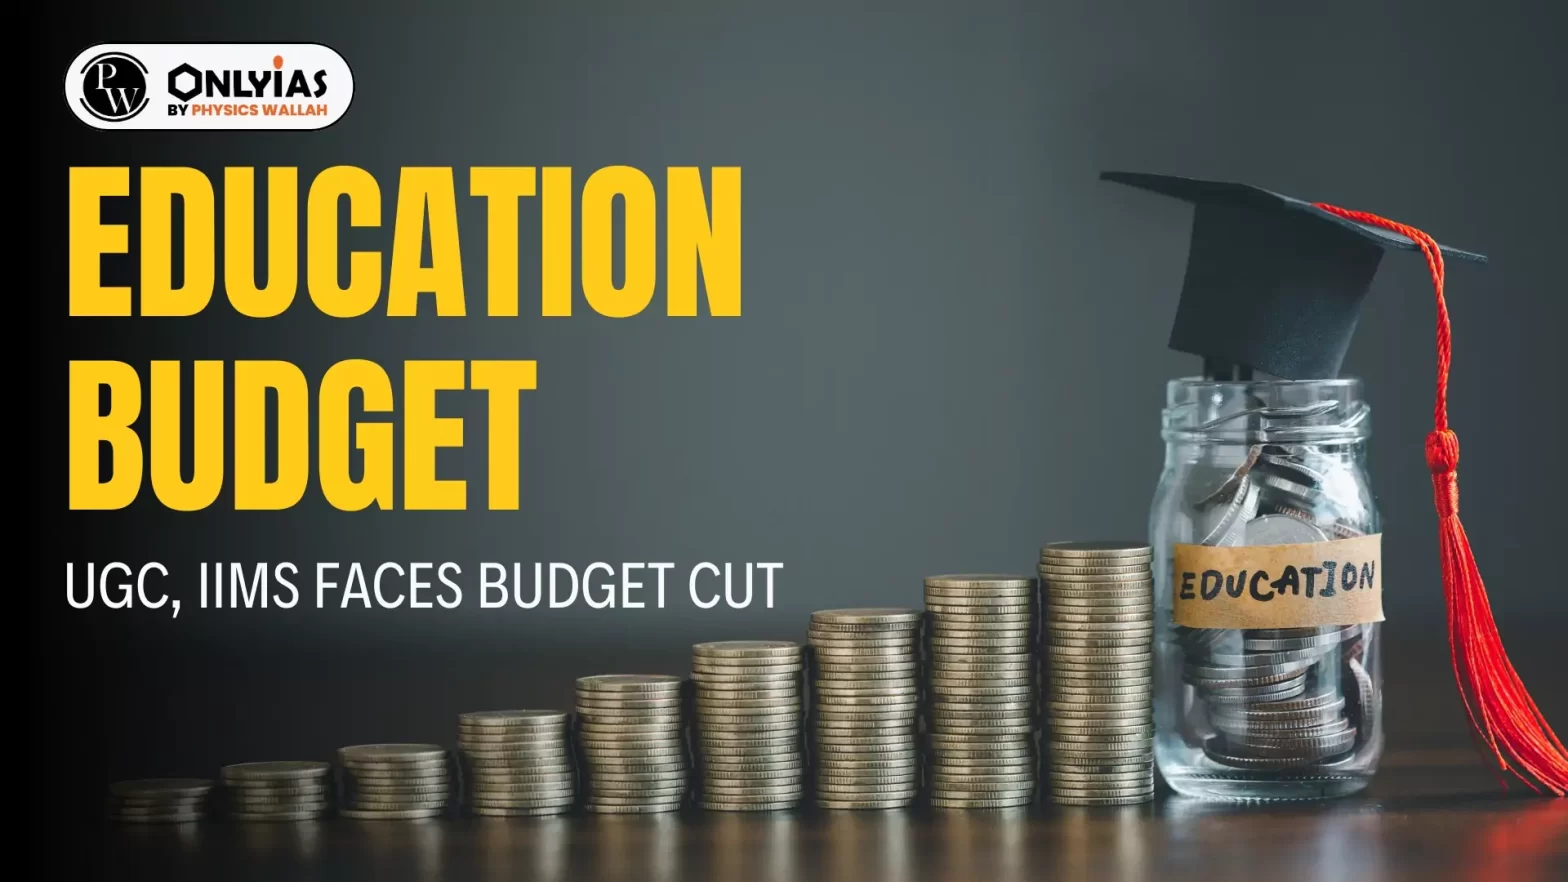 Education Budget: UGC, IIMs Faces Budget Cut